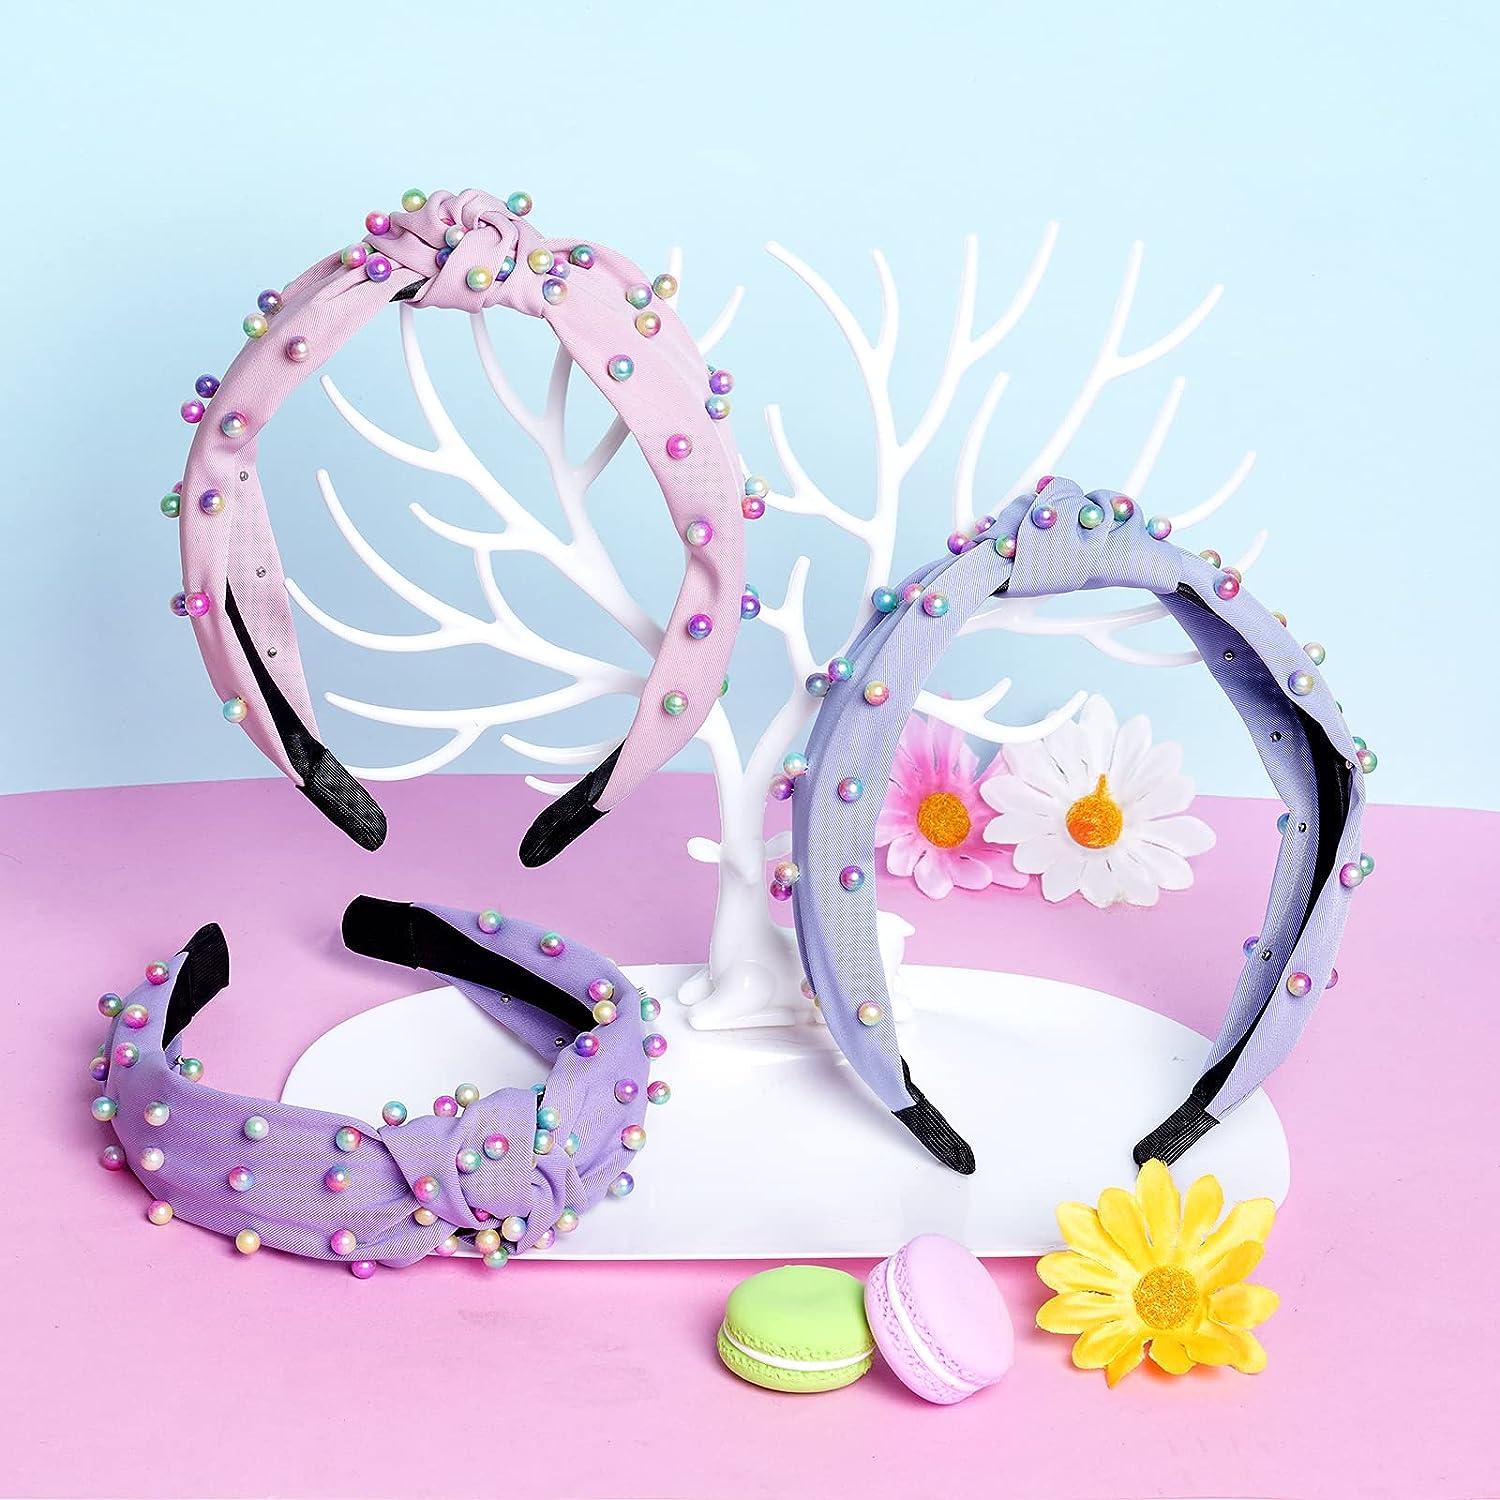 Flower-Embellished Hair Band - Lilac